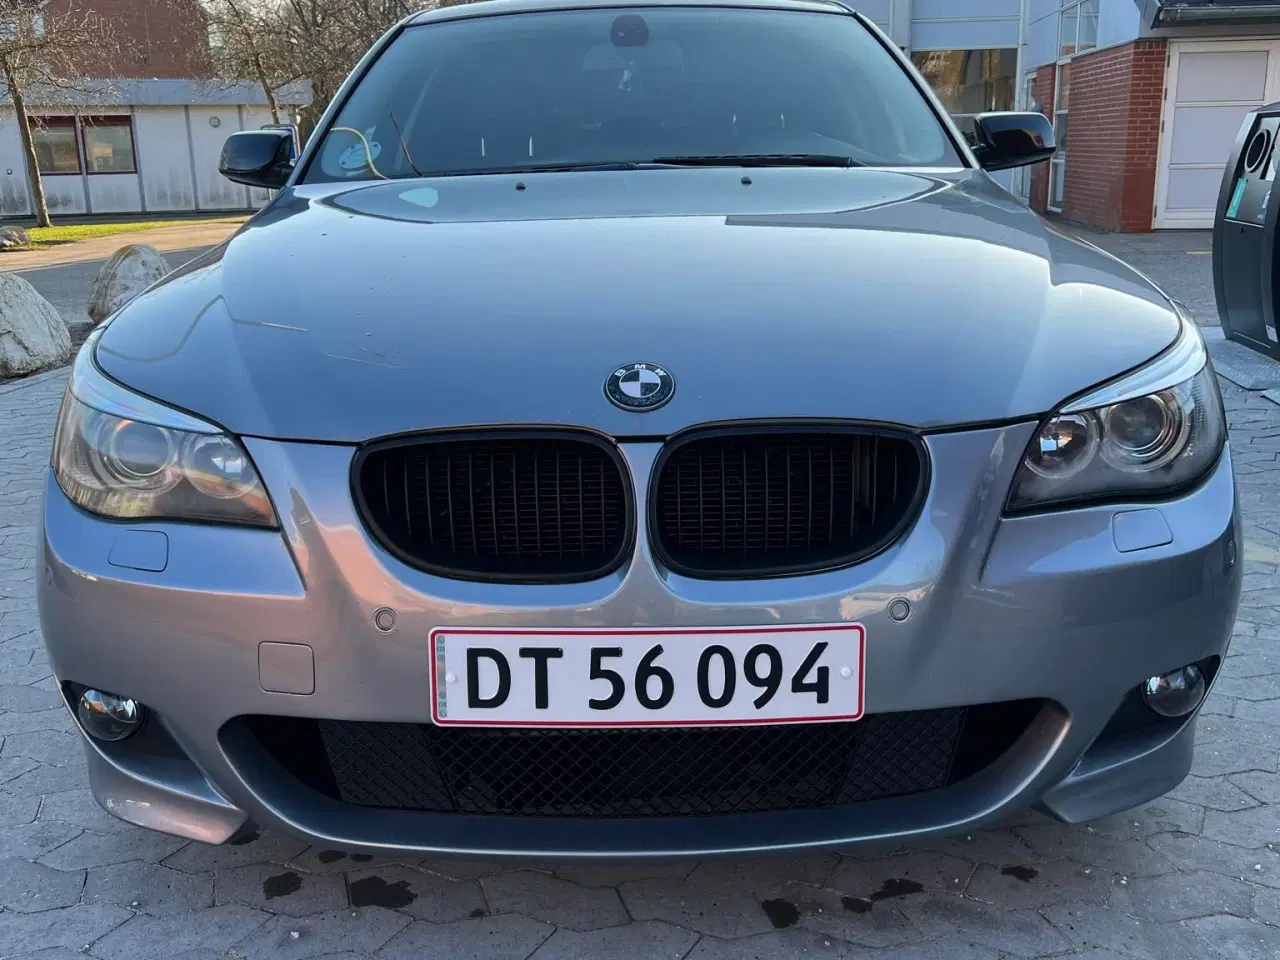 Billede 1 - Personbil BMW 520i